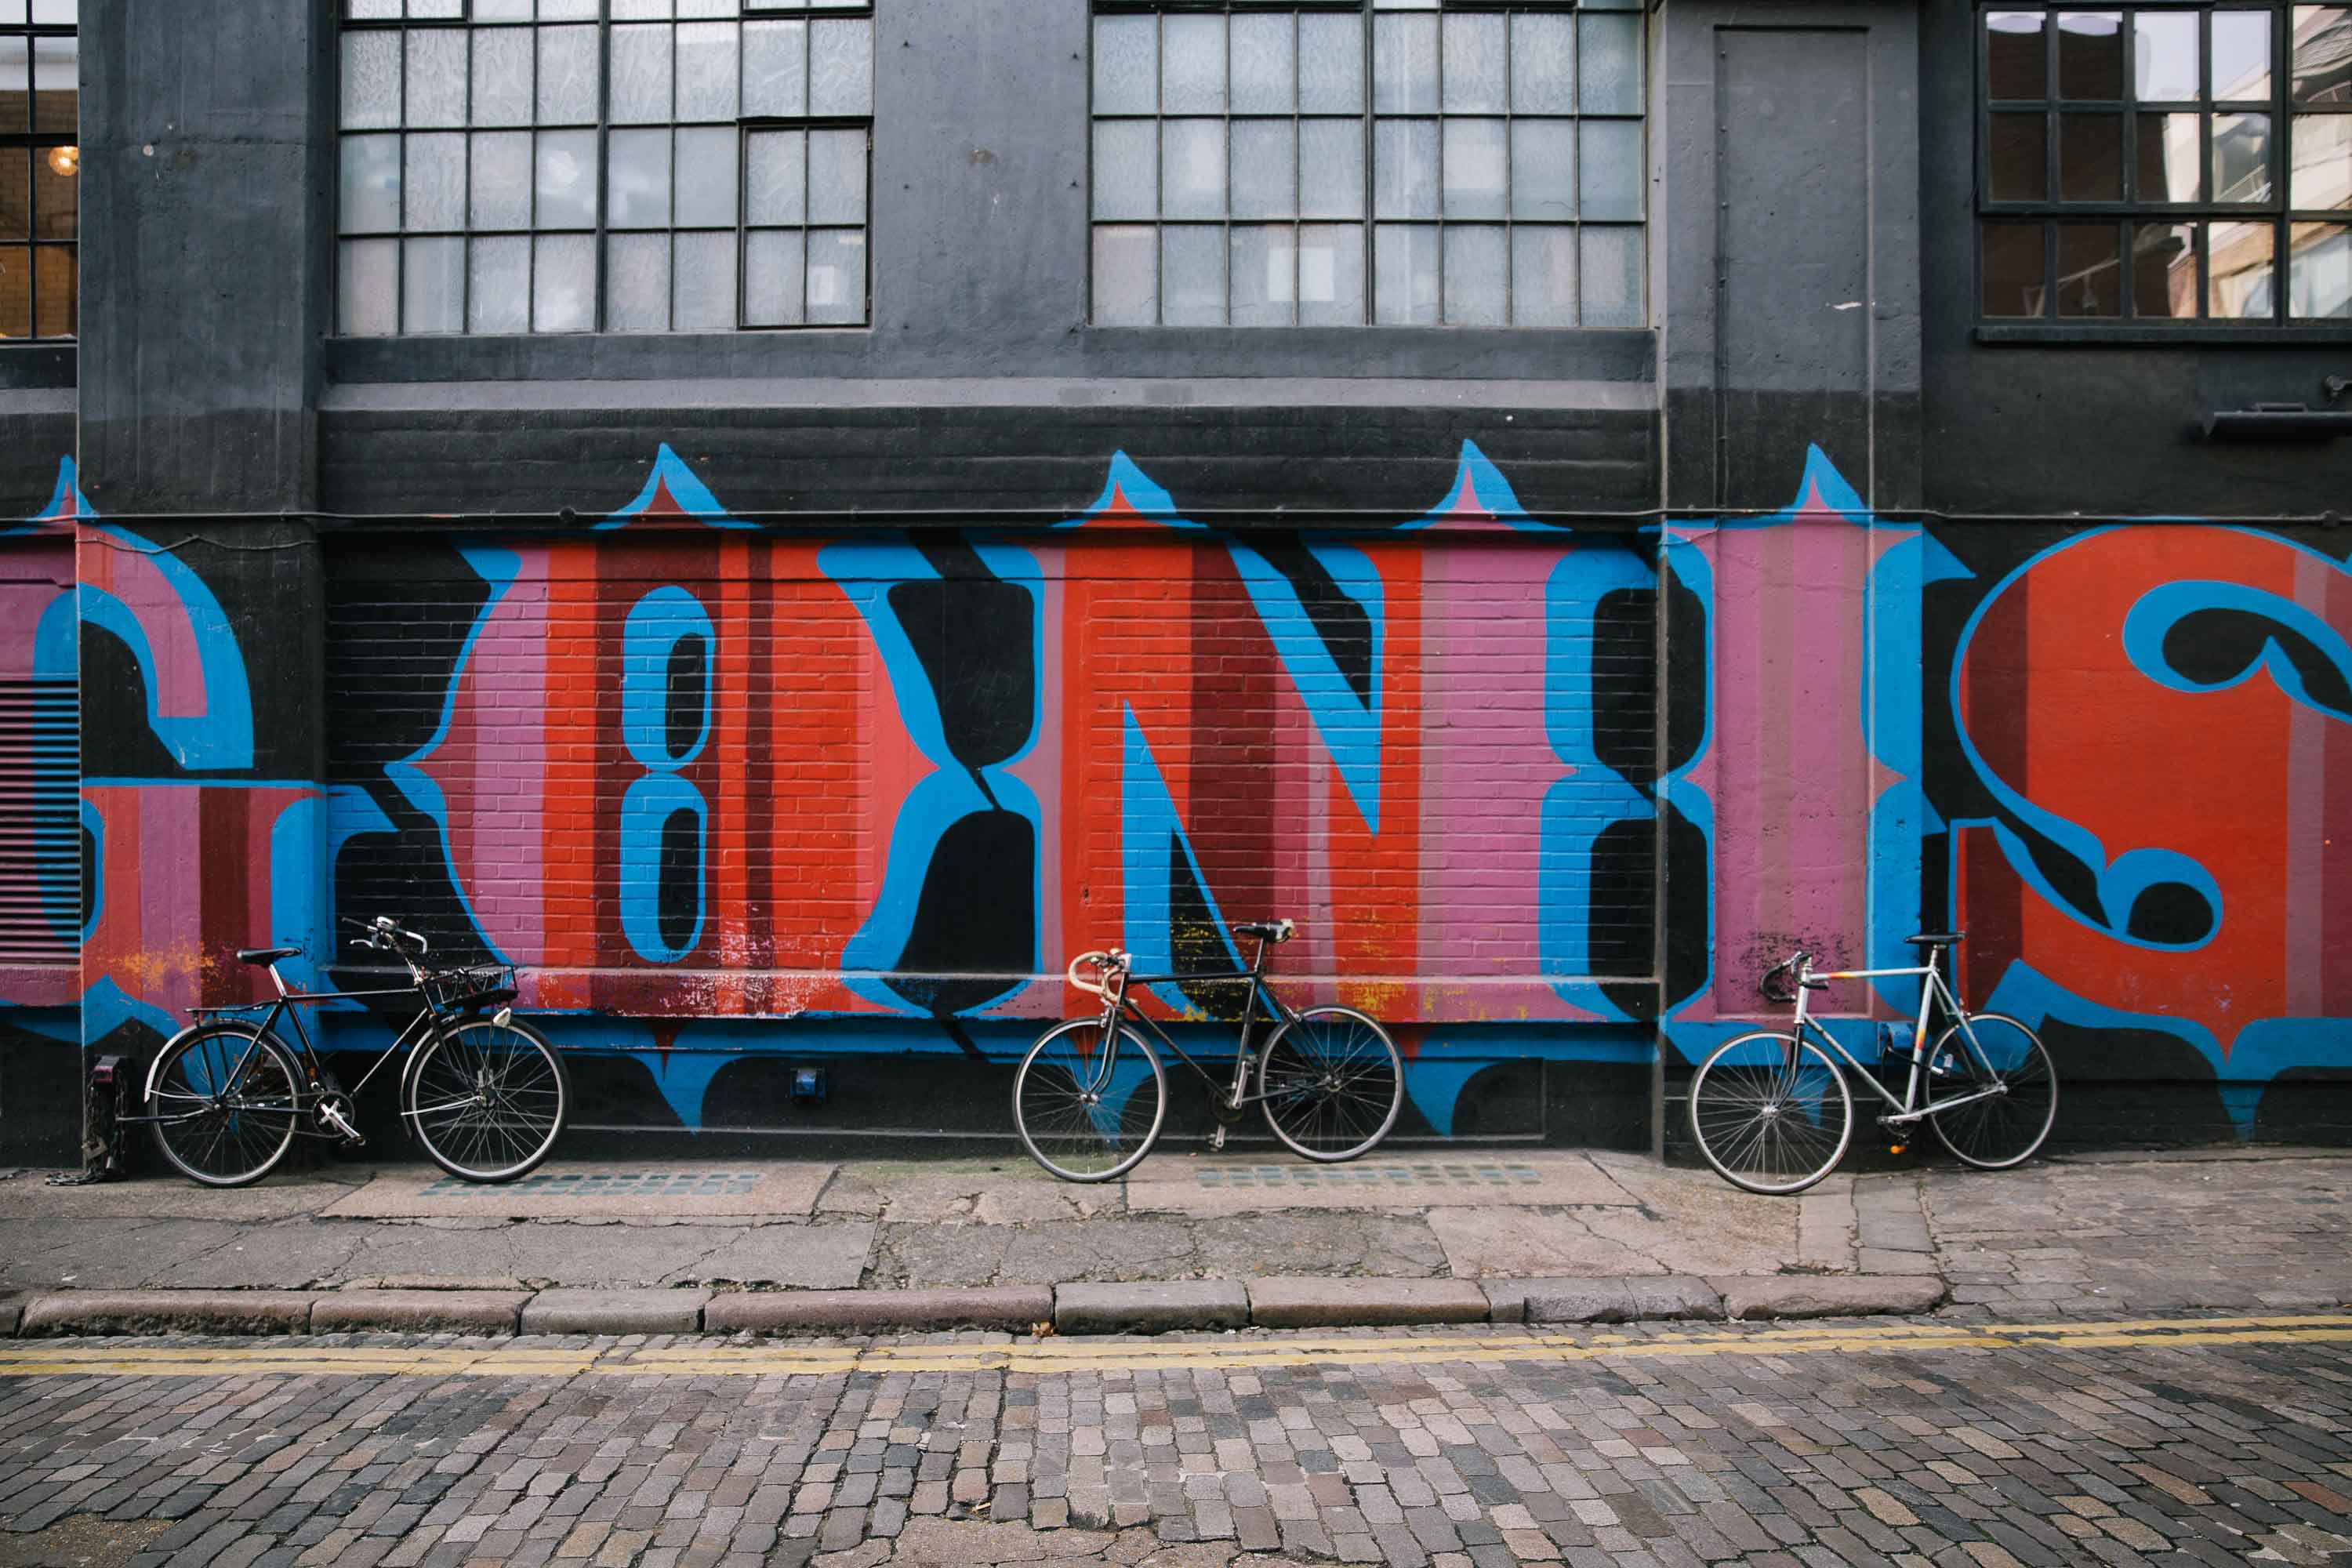 graffiti wall with bikes